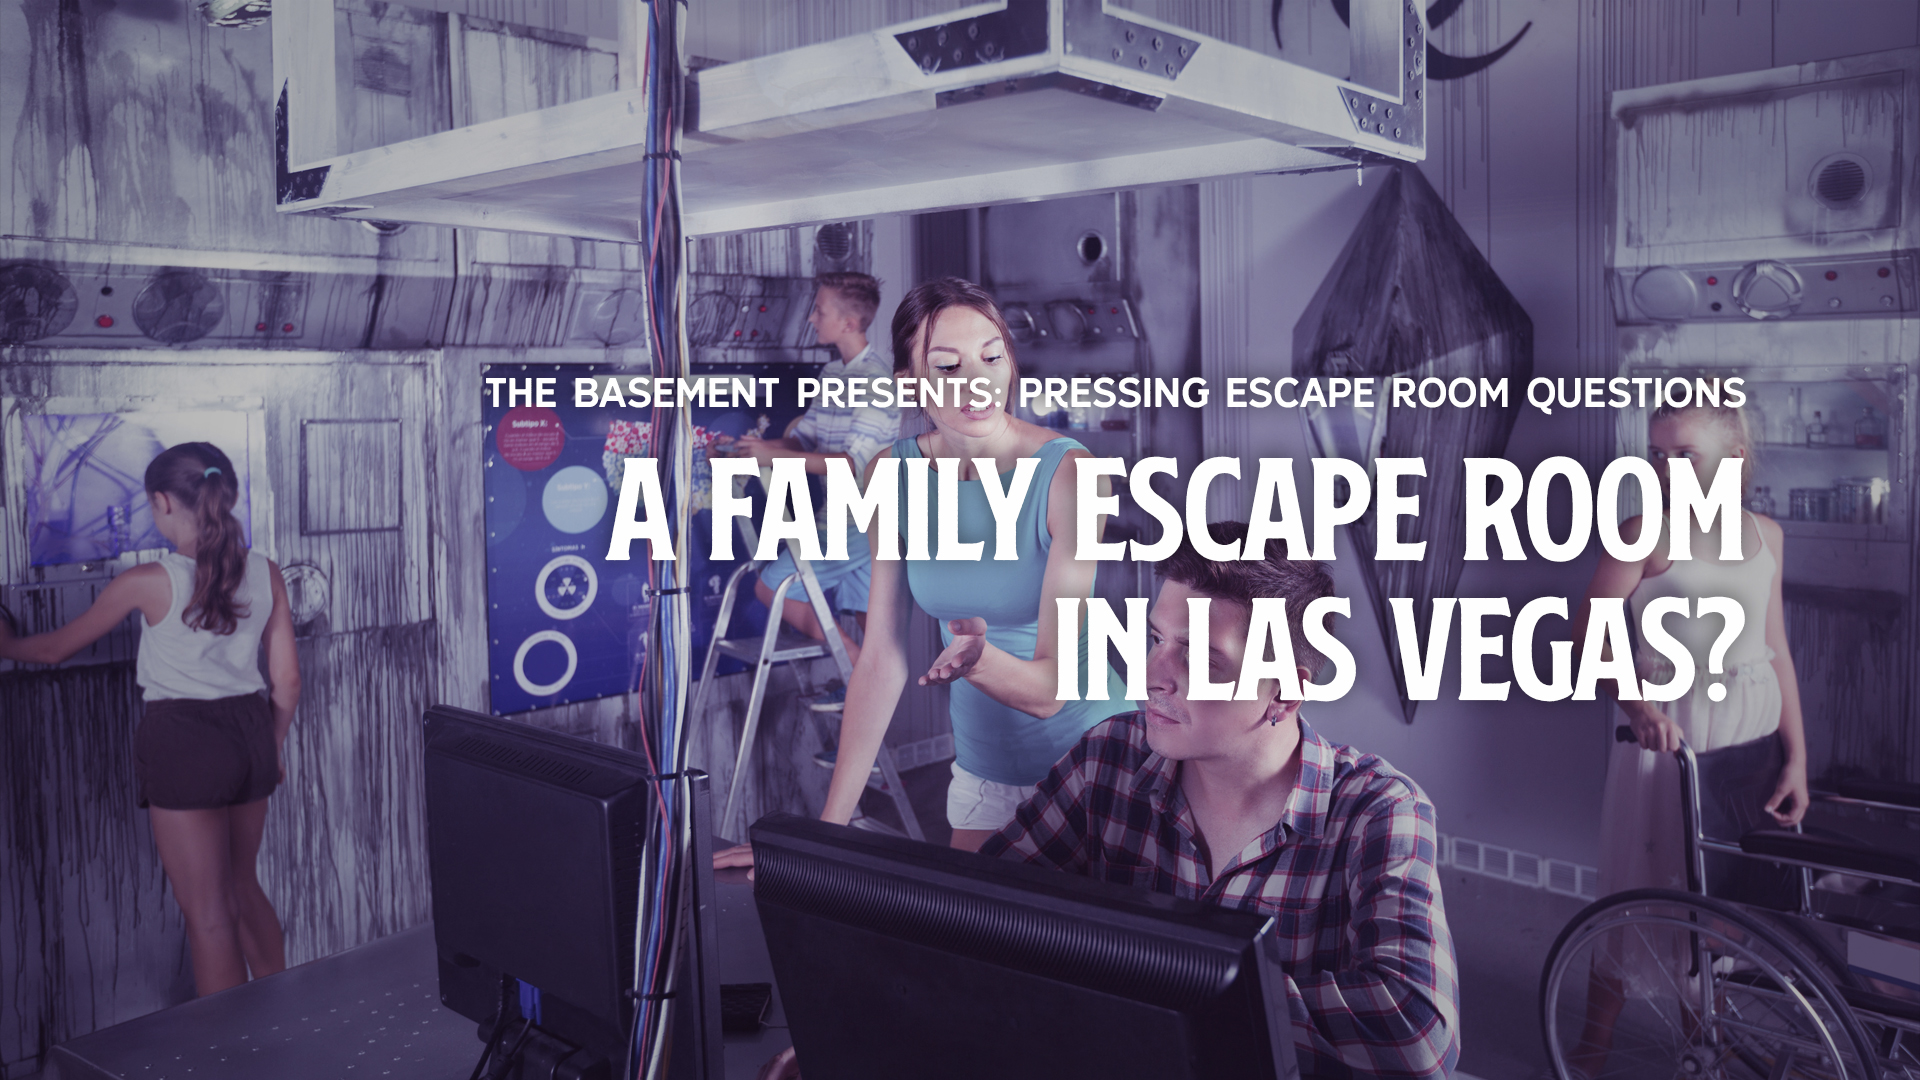 Family Escape Room: Las Vegas, NV